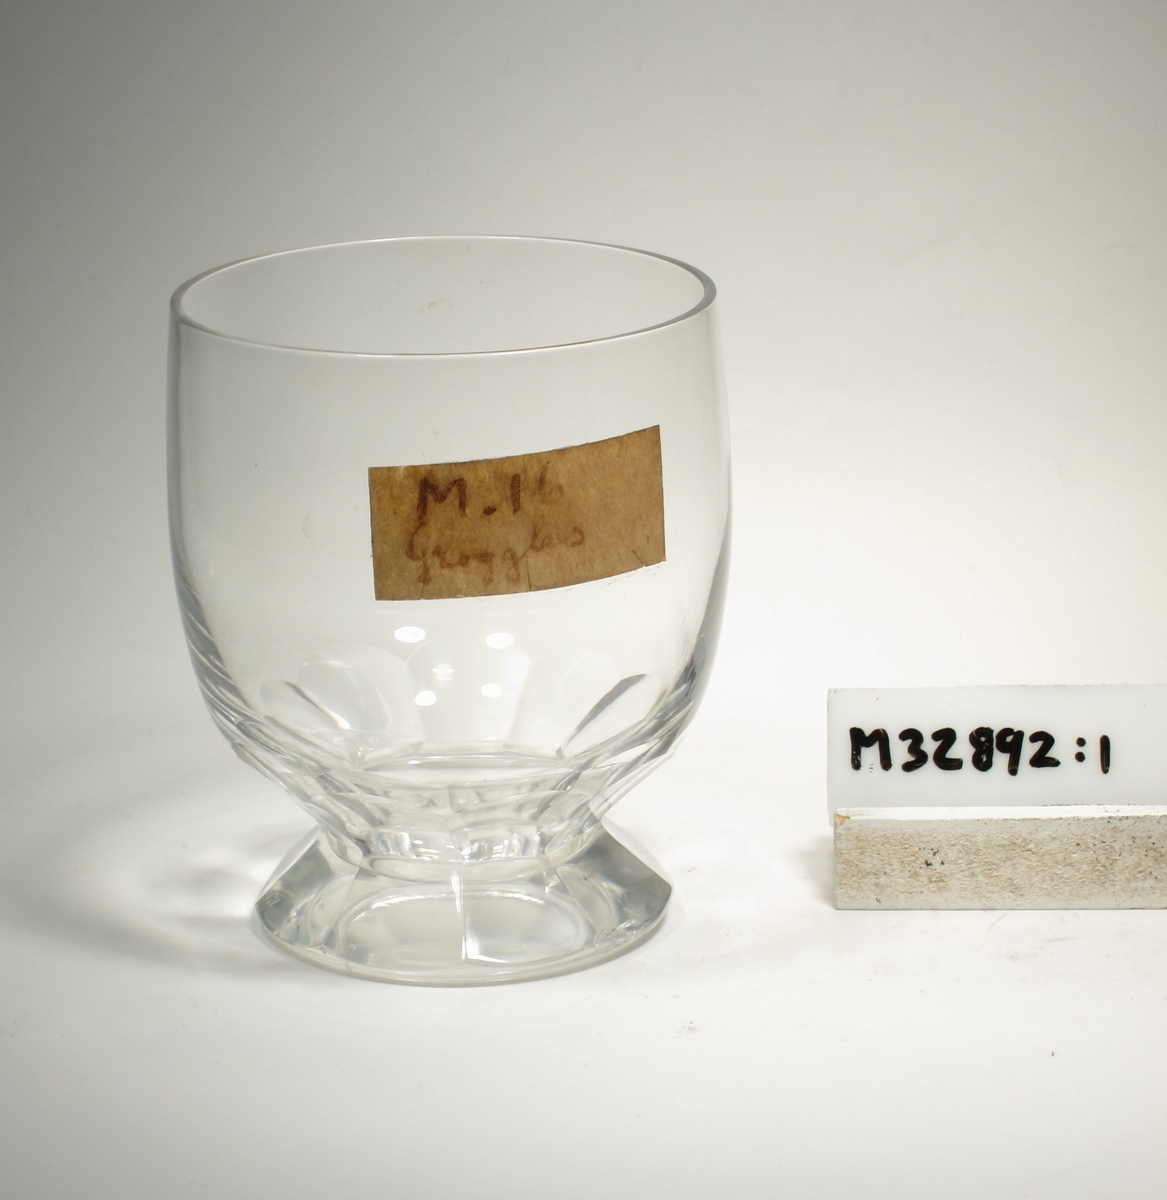 Svagt elliptisk kupa på konisk klack. Glaset är facettslipad i 9 bågar.
Lapp: "M.16 Grogglas"